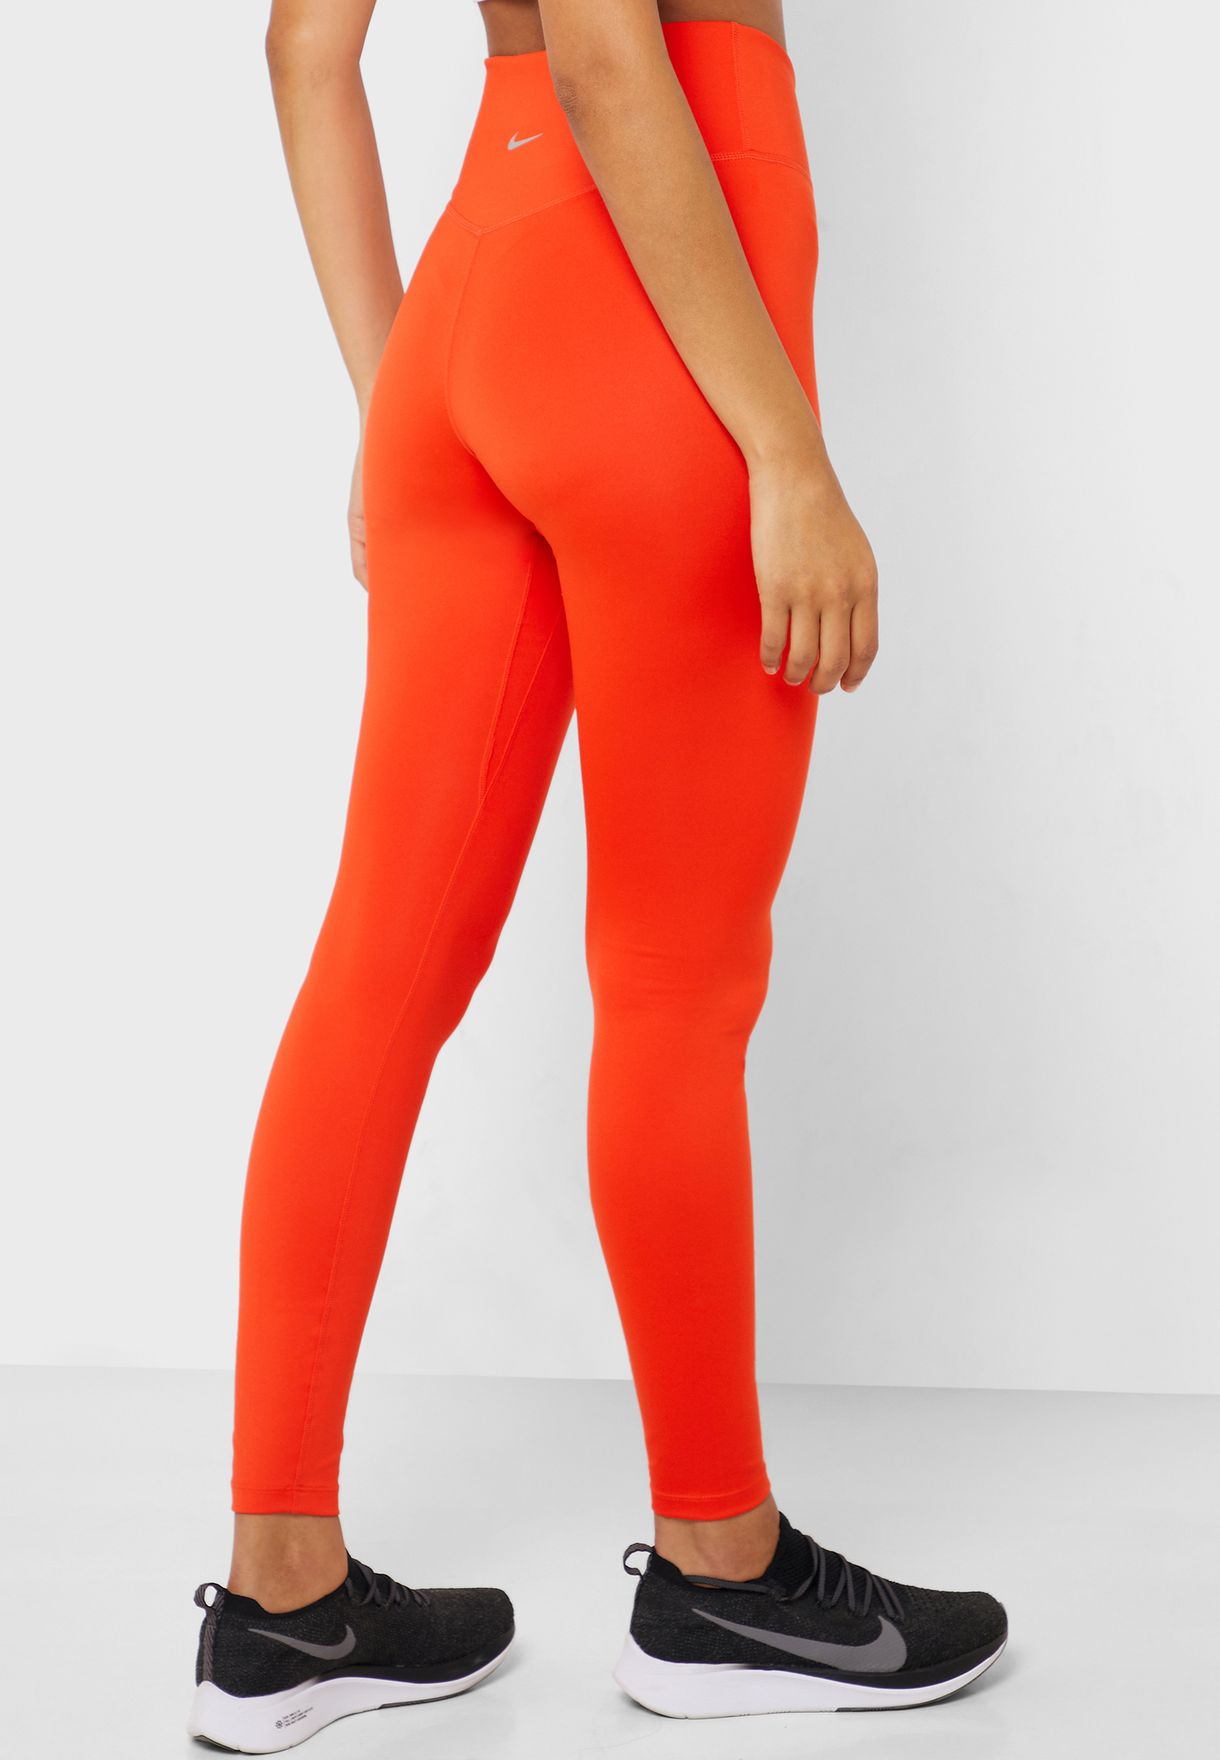 nike leggings orange